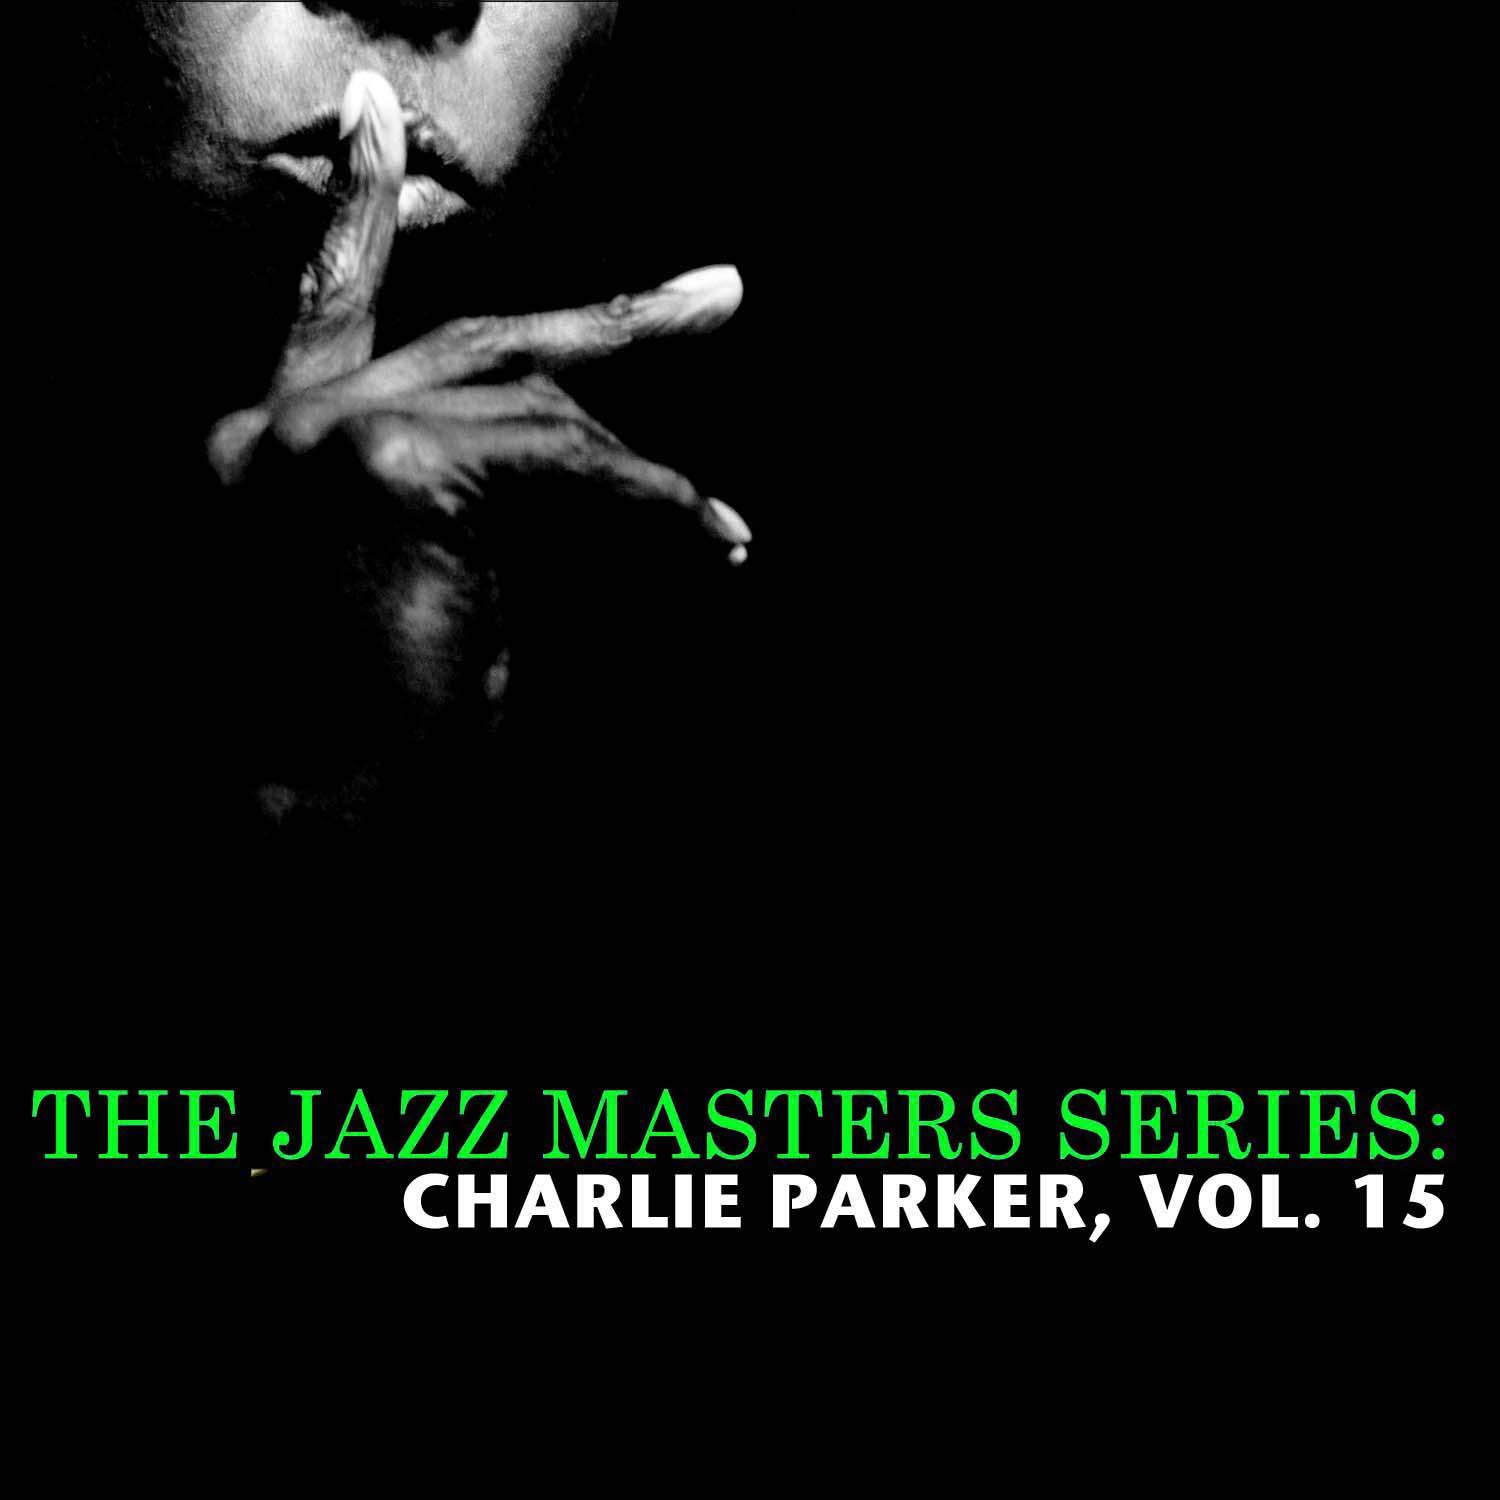 The Jazz Masters Series: Charlie Parker, Vol. 15